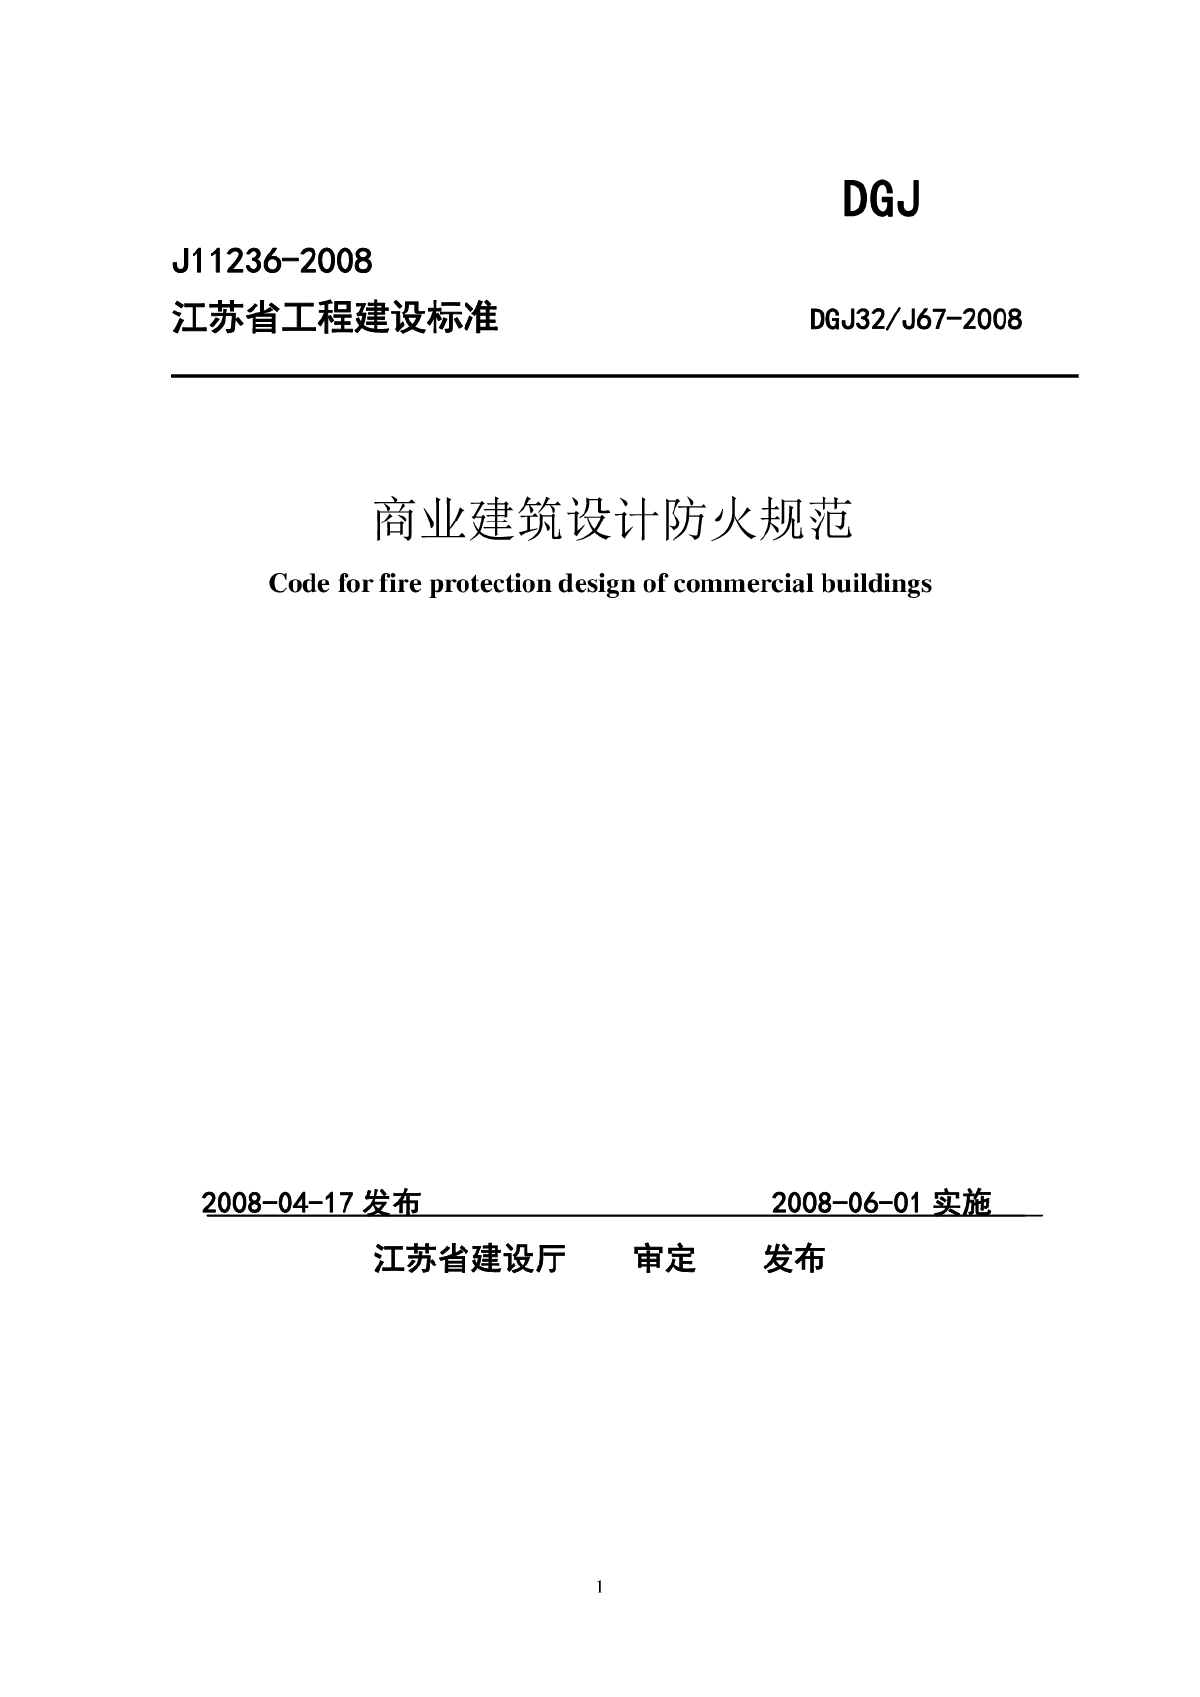 DGJ32 J 67-2008 江苏省商业建筑设计防火规范-图一